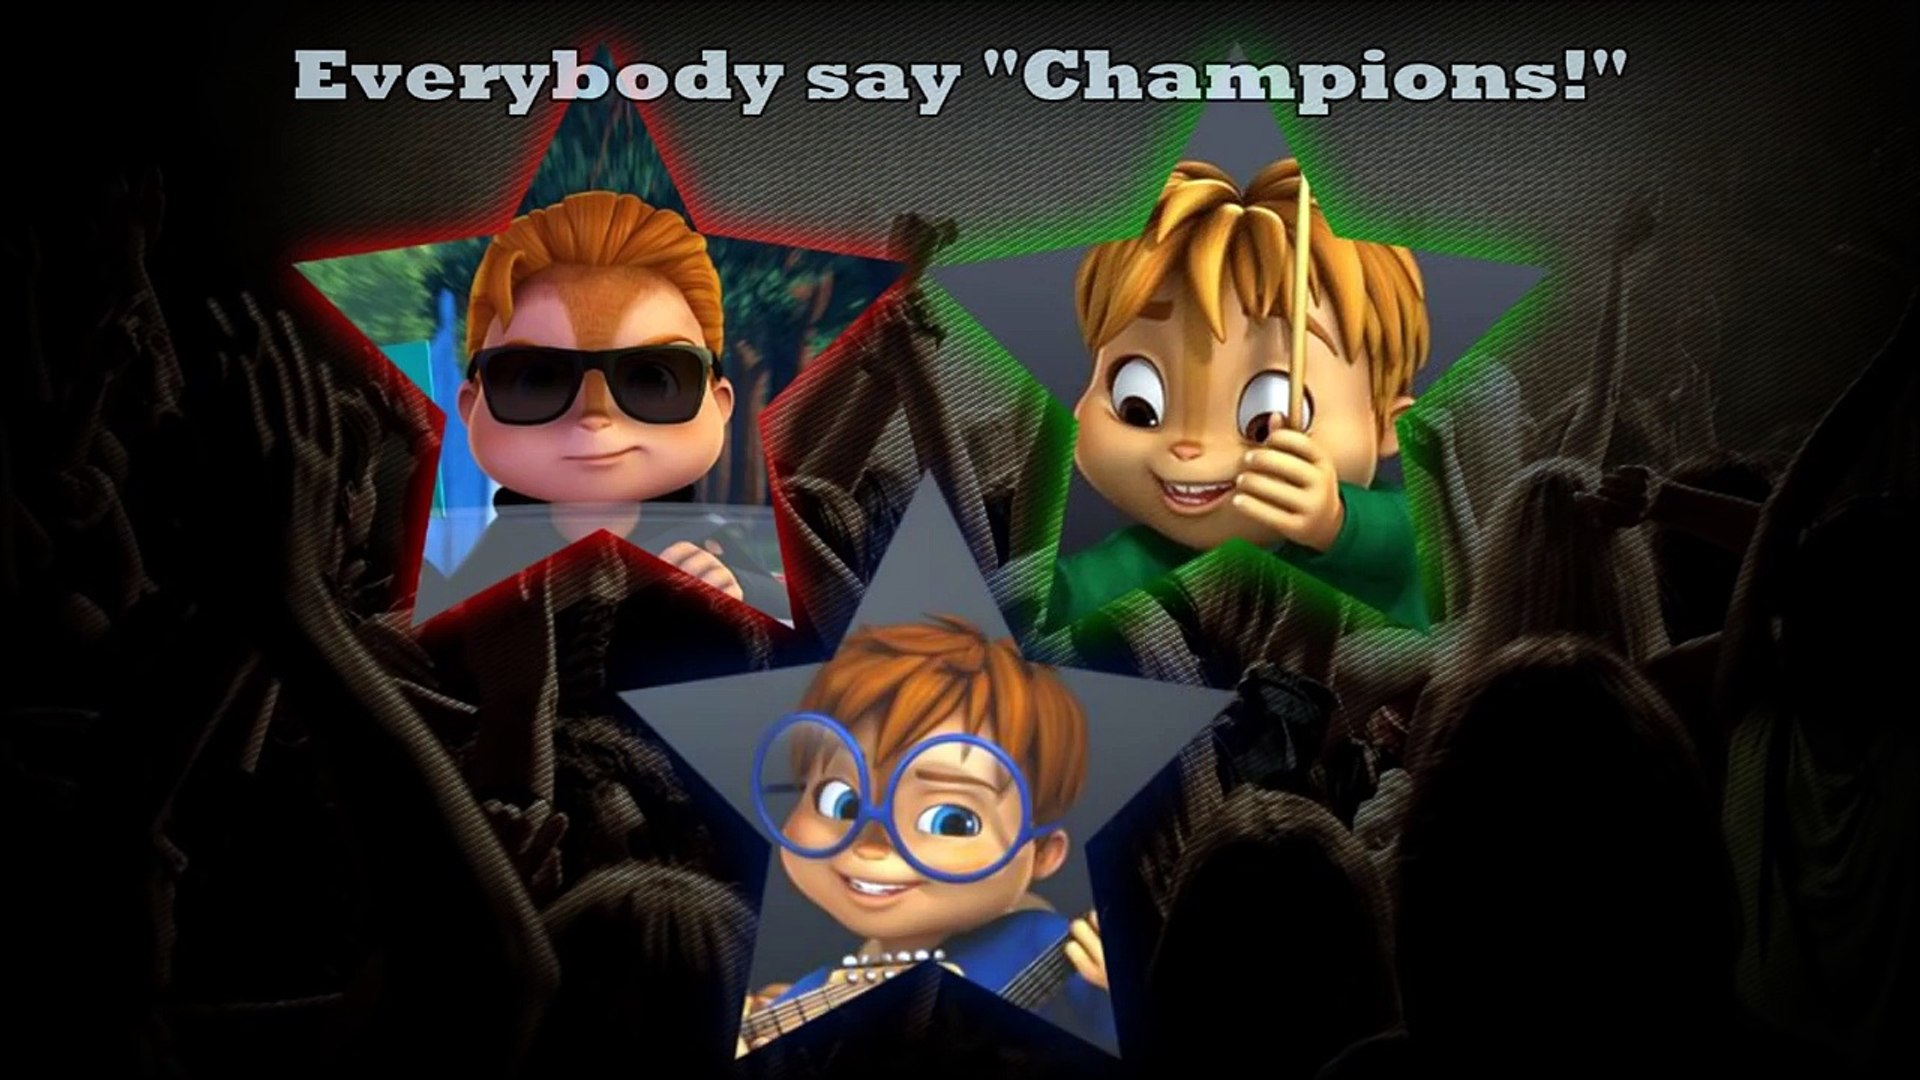 Champions Alvin and the chipmunks Lyrics - video Dailymotion